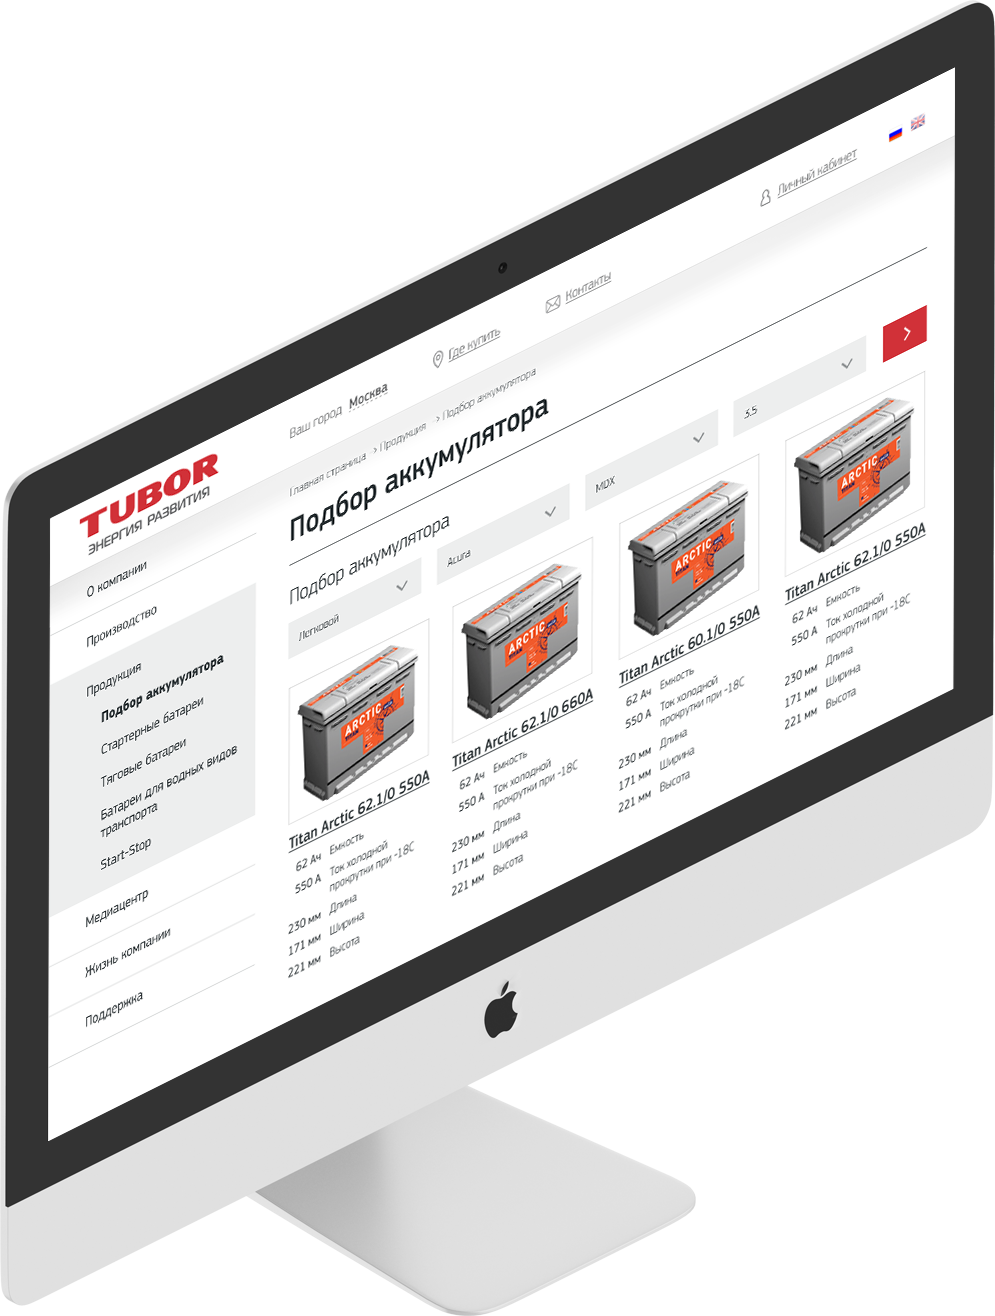 Разработка интернет-магазина аккумуляторов Tubor на 1С-Битрикс